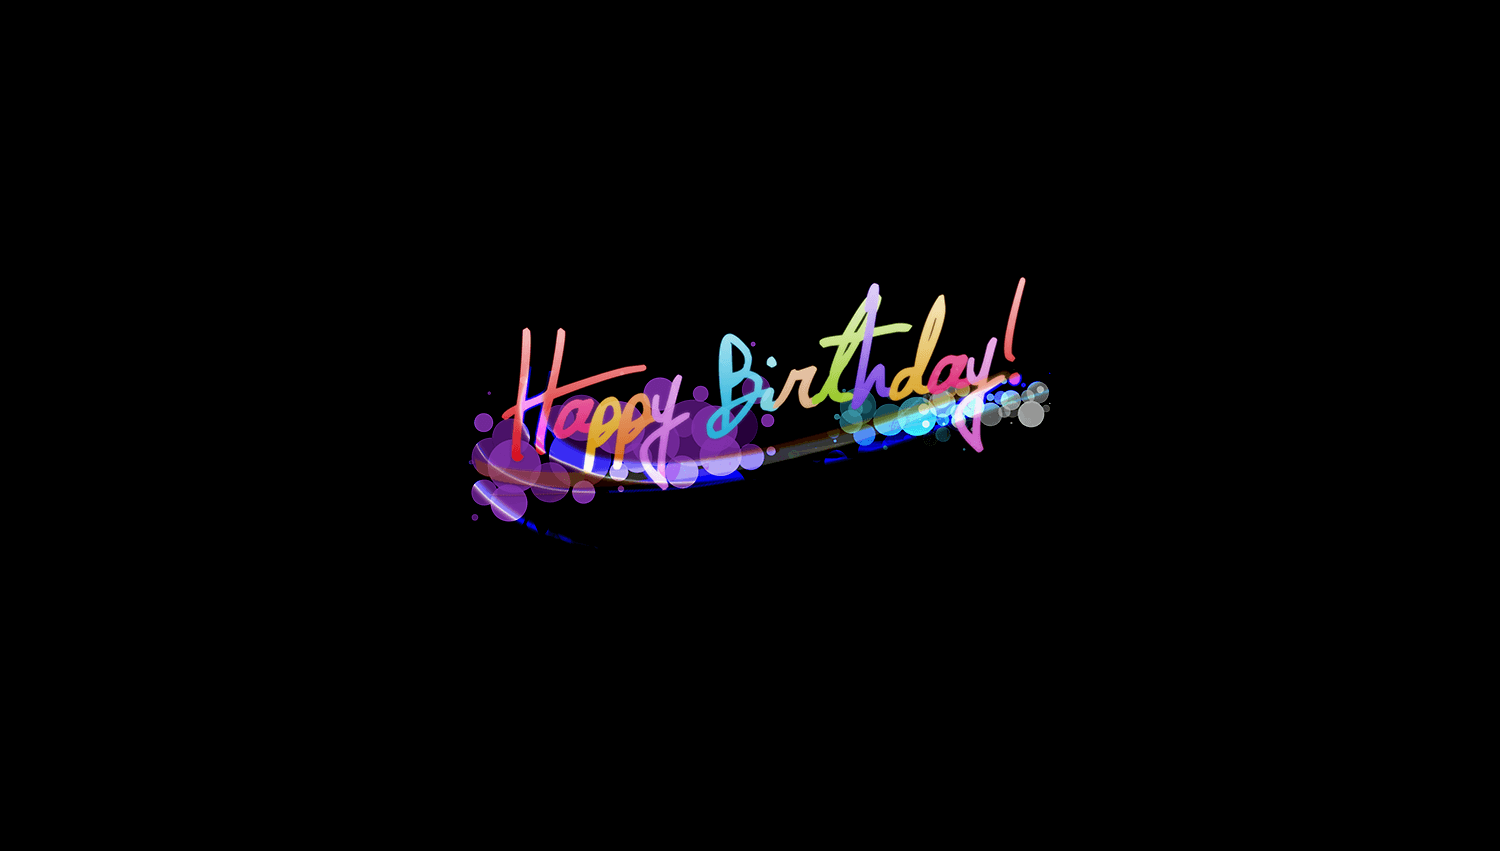 Happy Birthday Wallpaper. Free HD Desktop Wallpaper. Viewhdwall